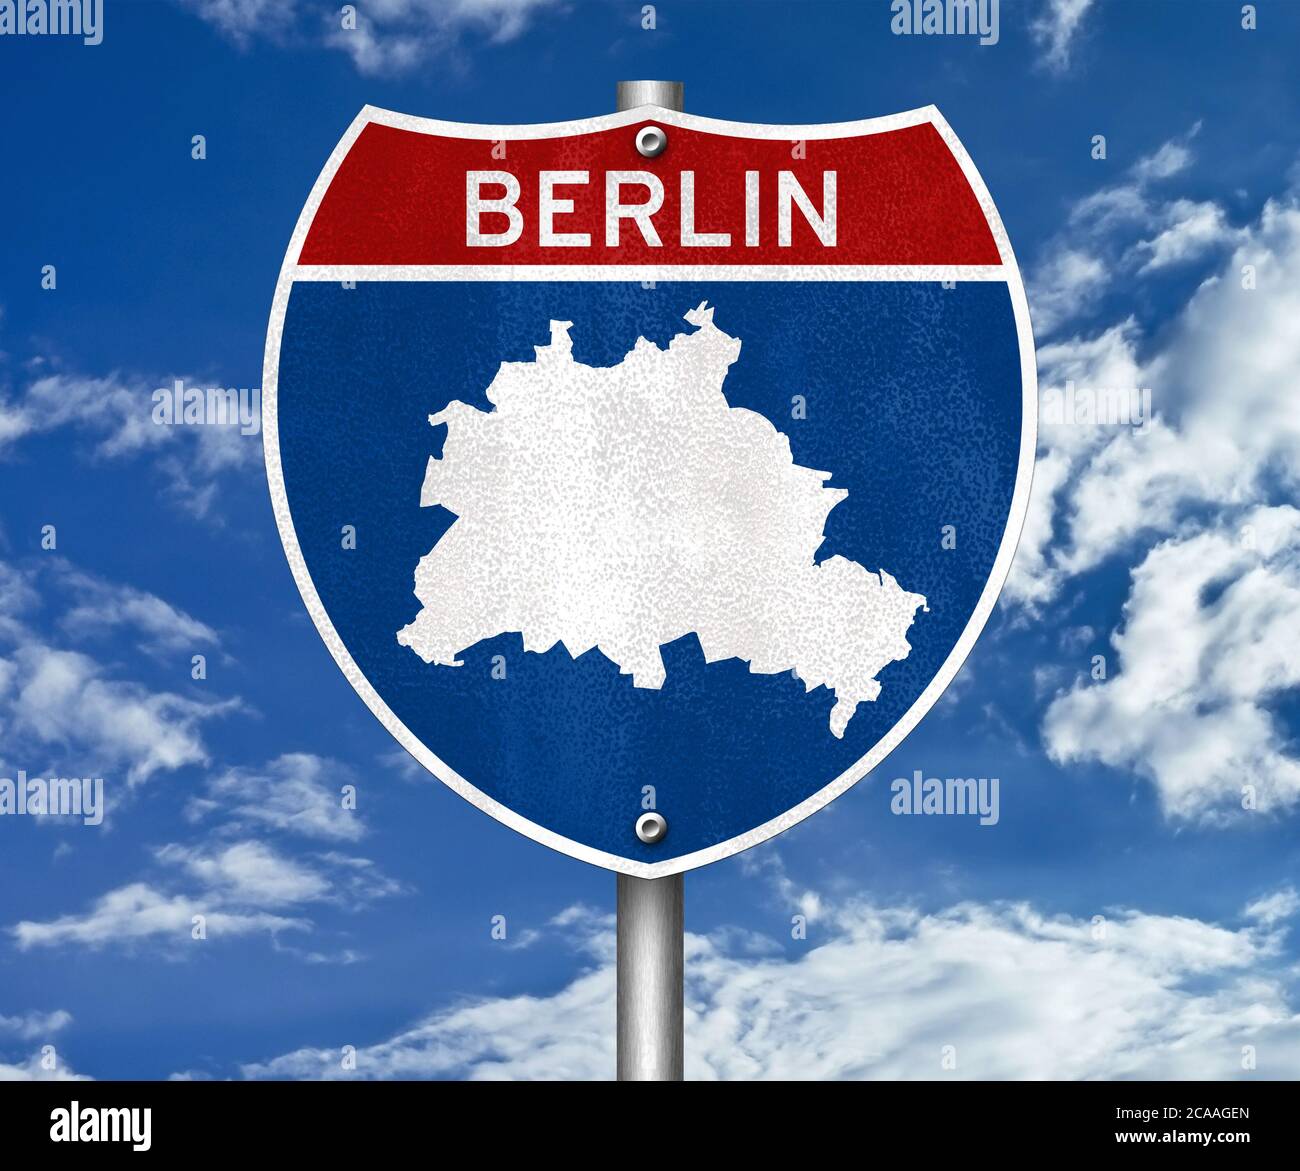 Mapa de Berlín Fotografía de stock - Alamy